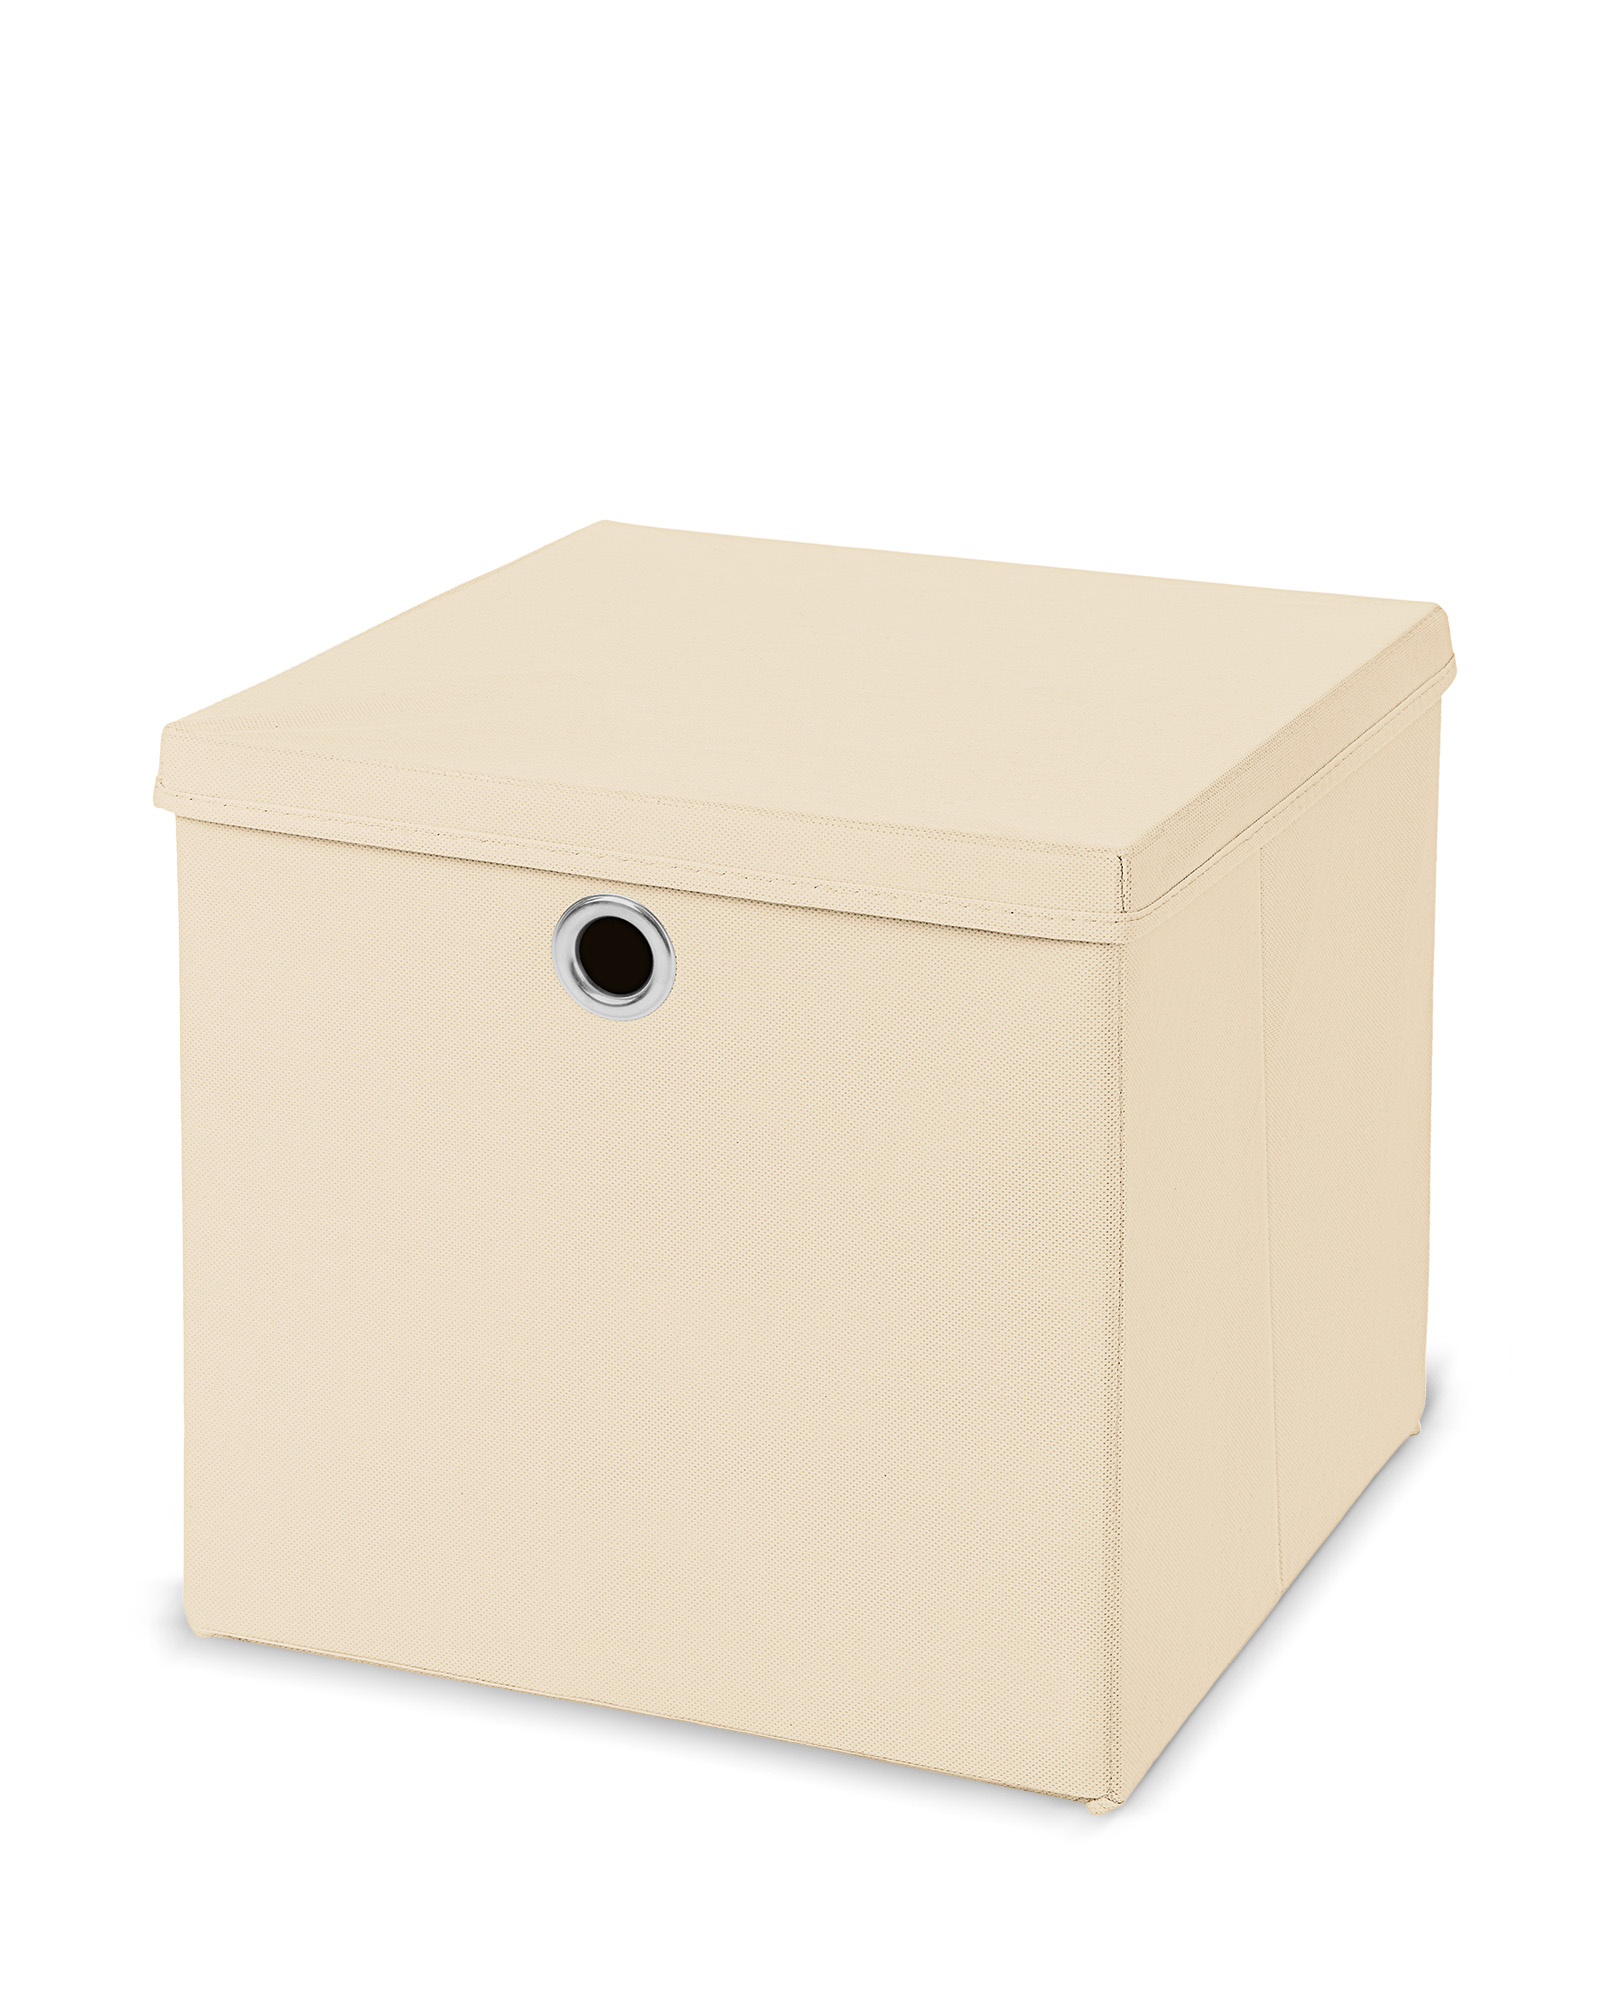 H&S) Aufbewahrungsbox MIA mit Deckel - Faltbox - Korb - 28x28x28